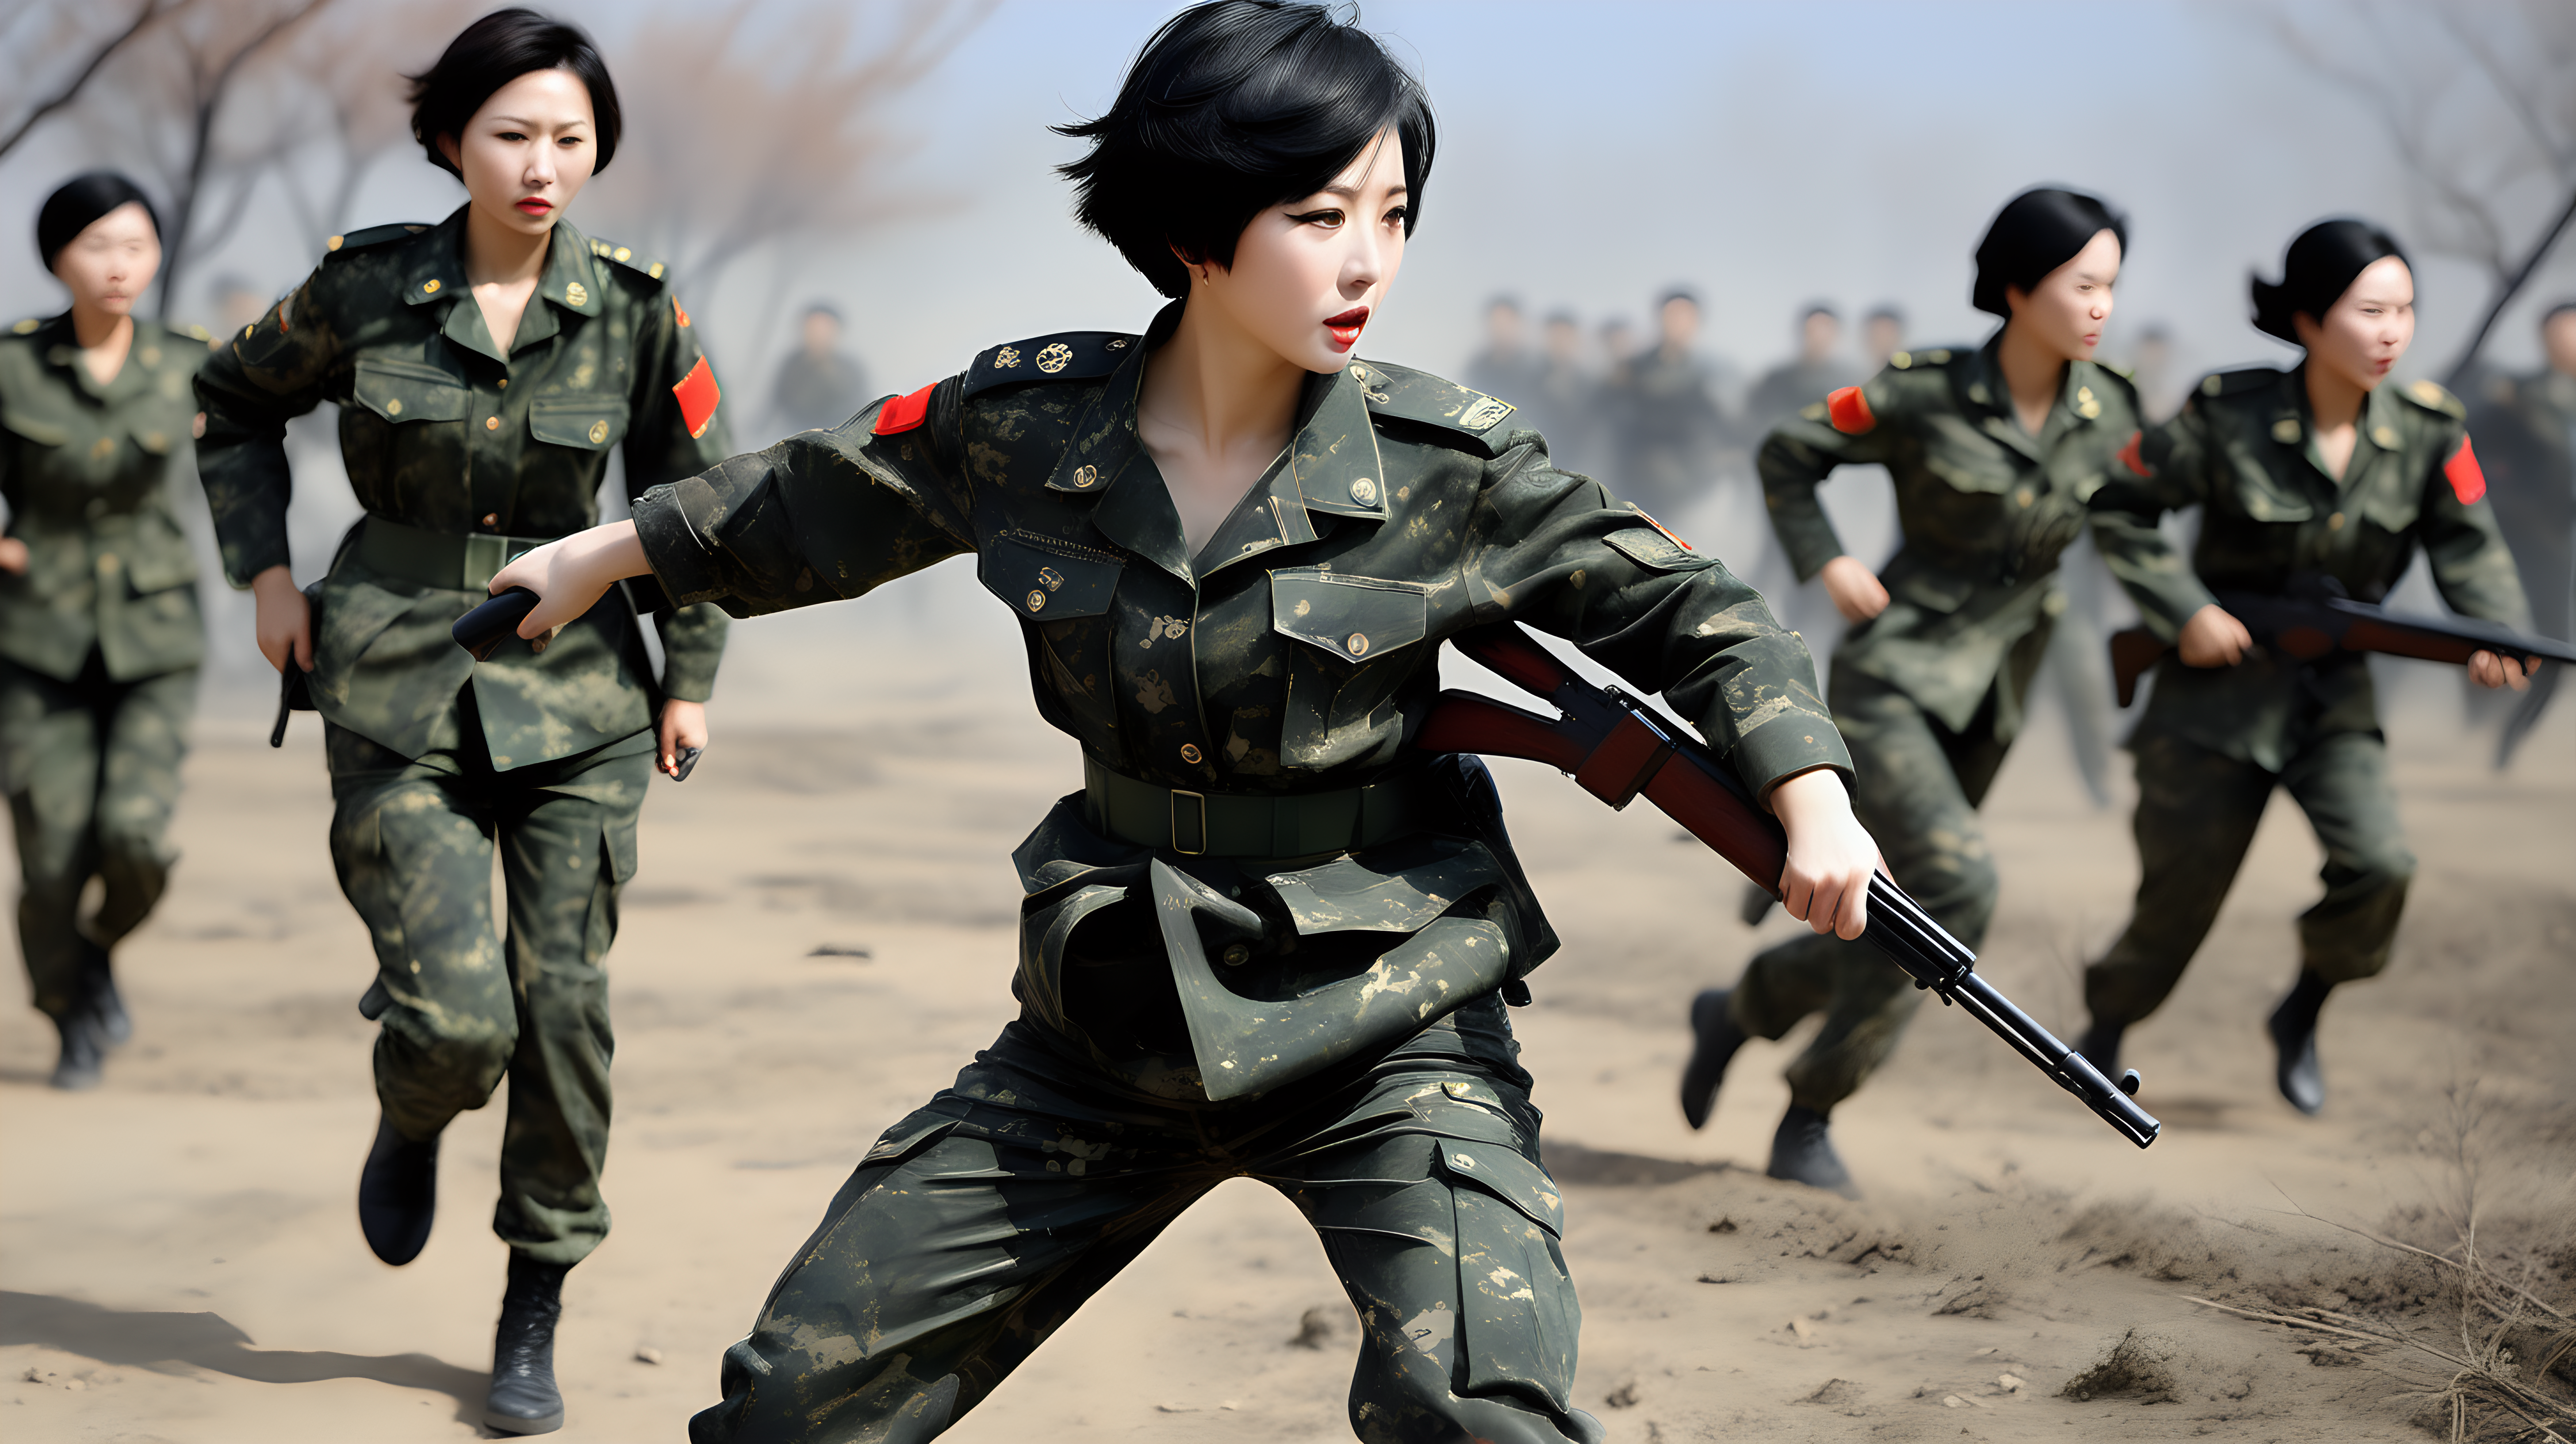 Chinese female soldiersShort hairBlack hairCamouflage tight pantsDragging injured